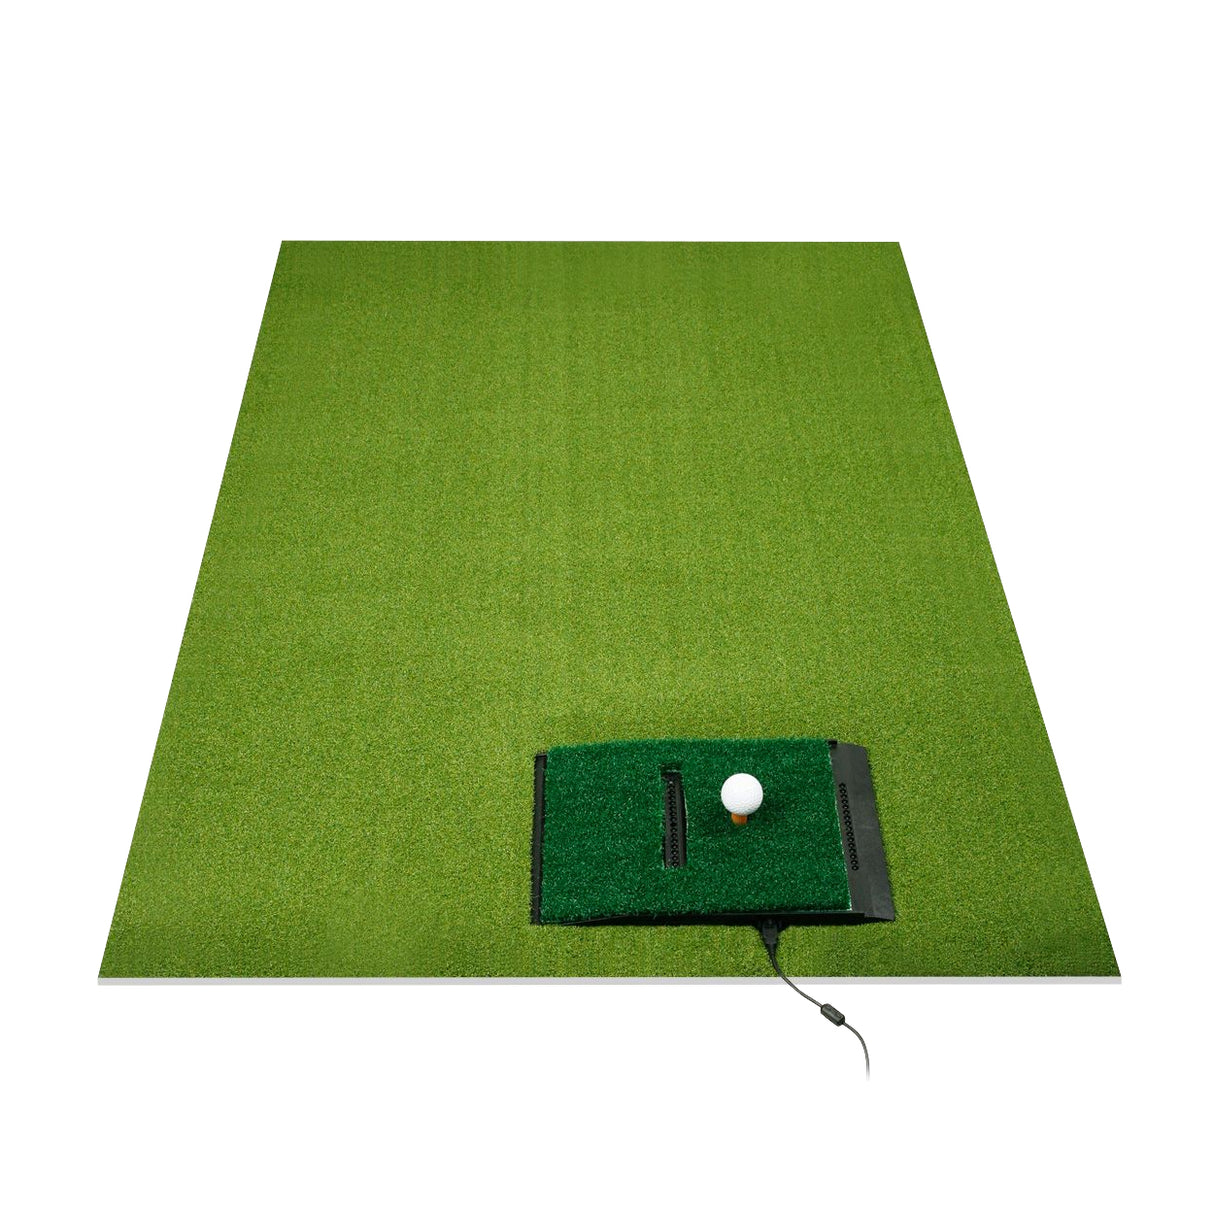 Orlimar Golf 4' X 5' Practice Hitting Mat for OptiShot 2 Simulator